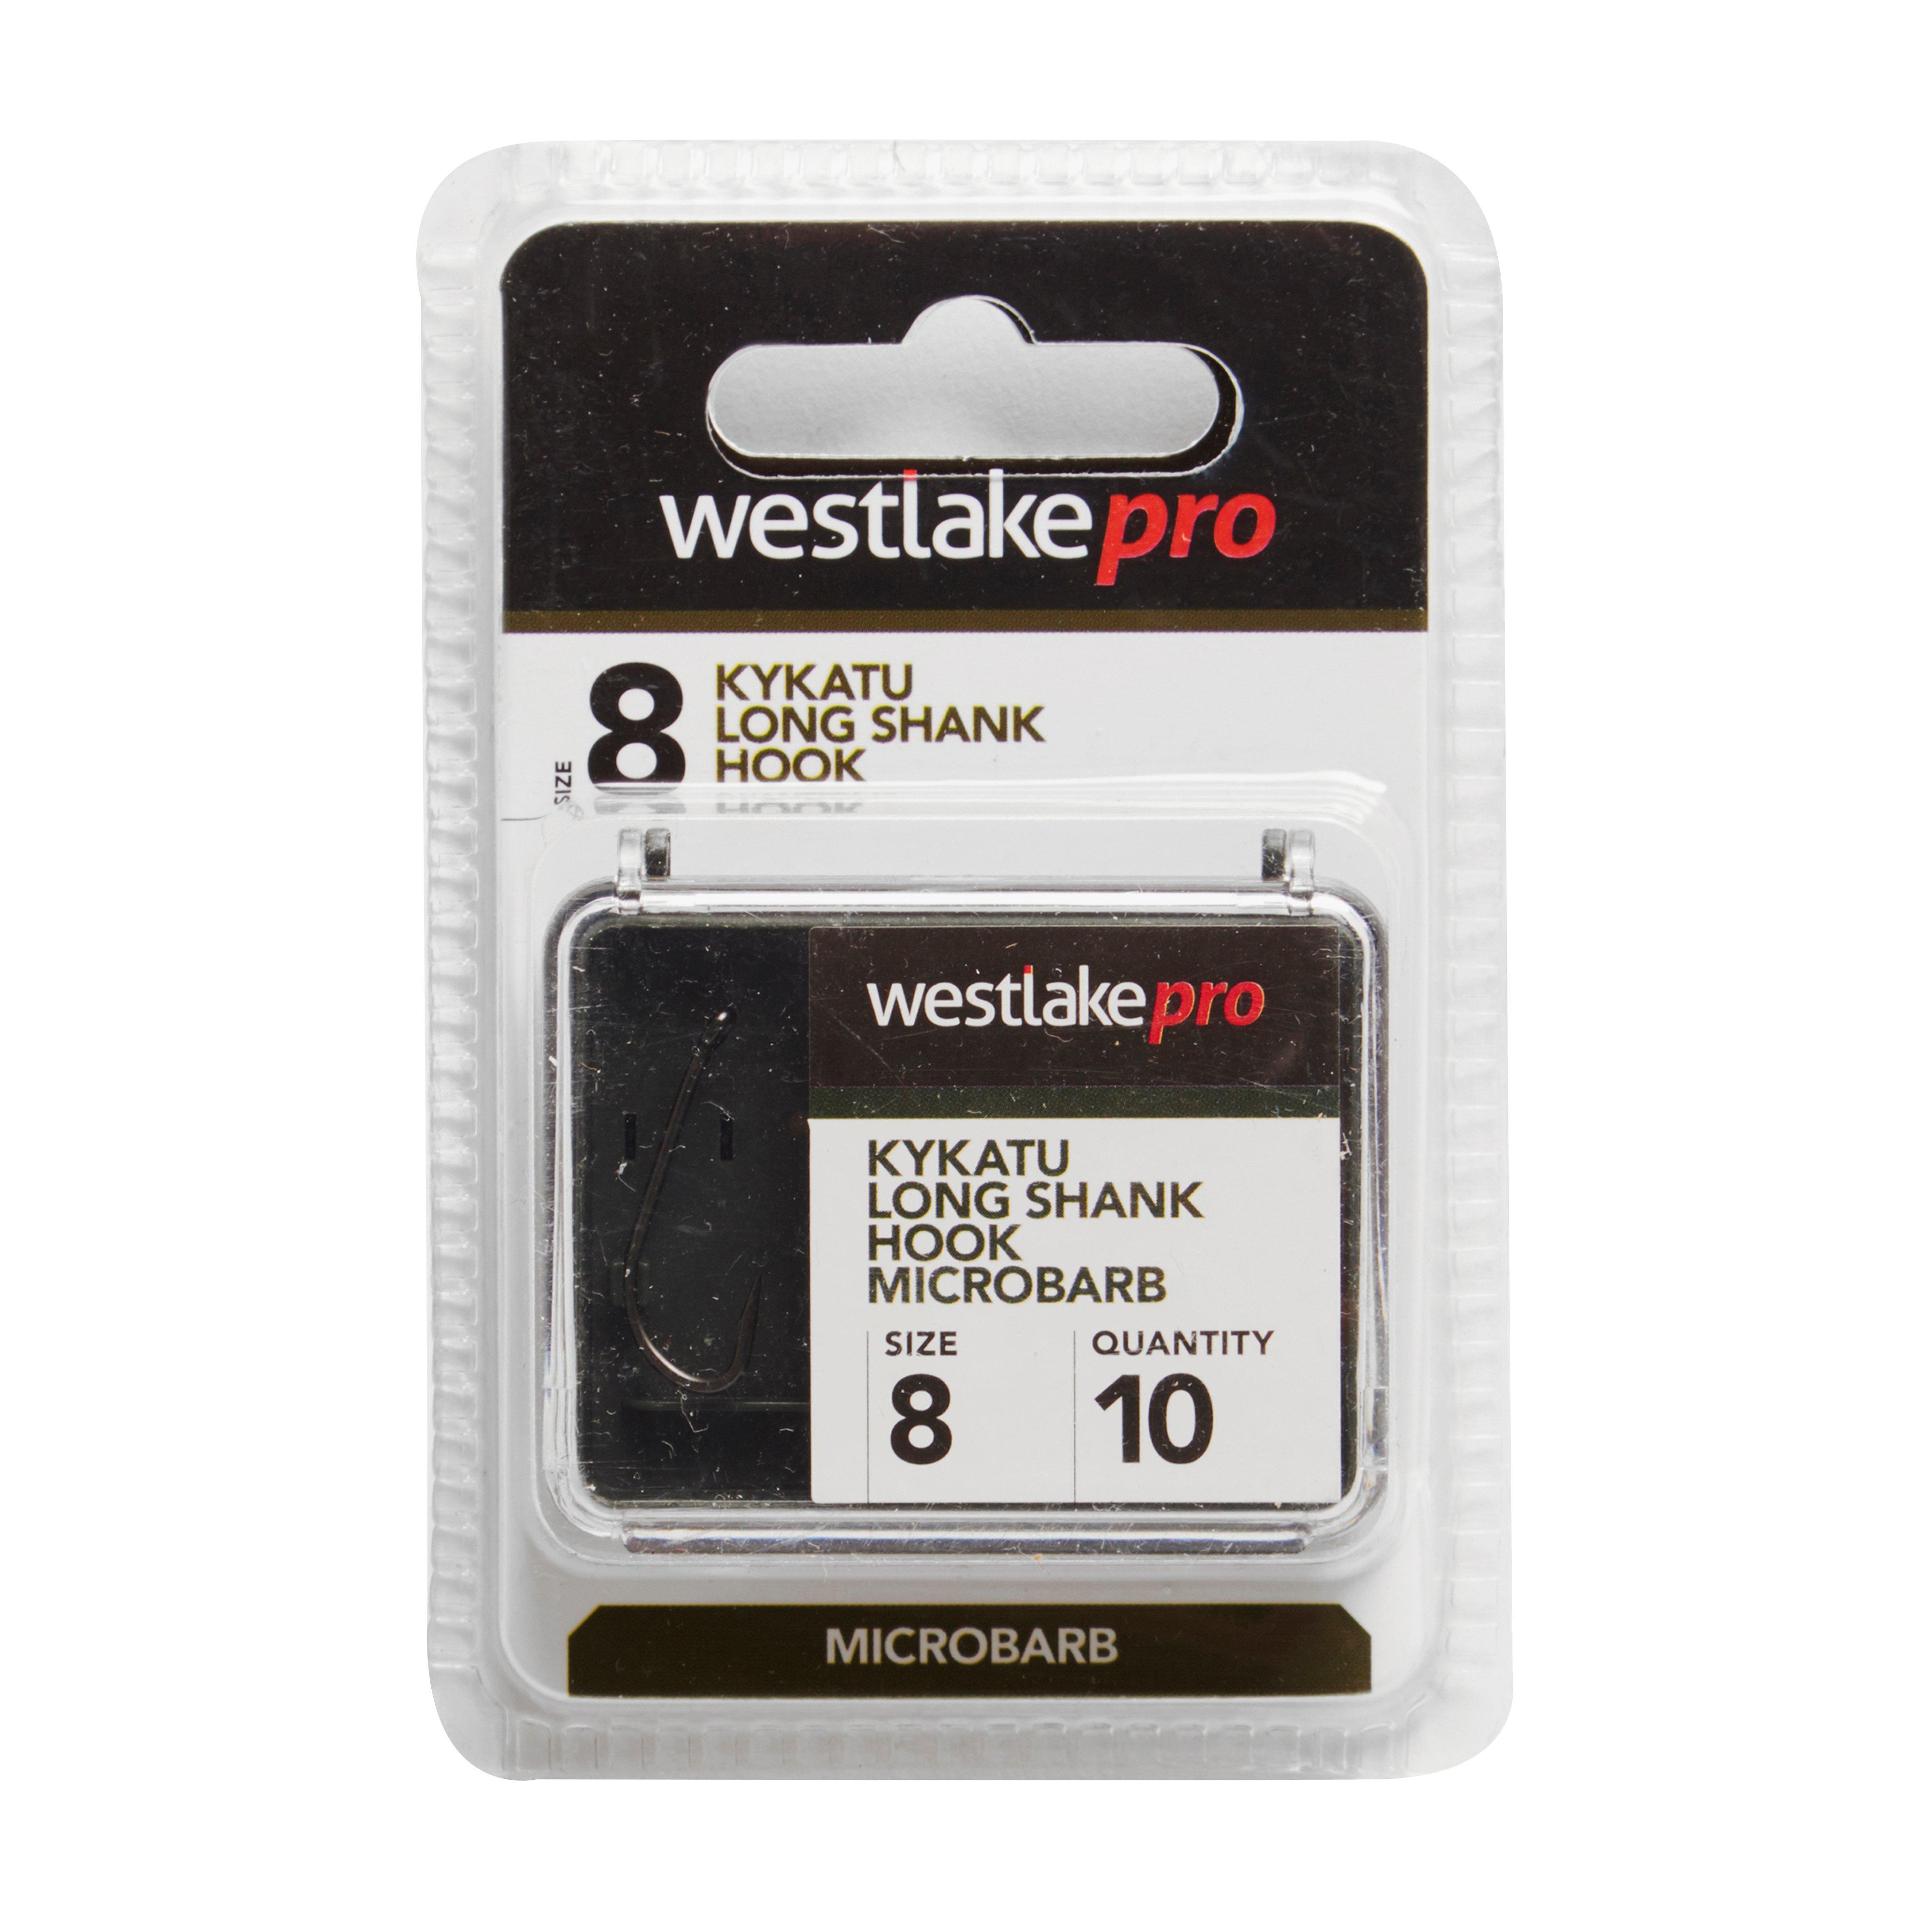 Westlake Long Shank 8 Micro Barb Review